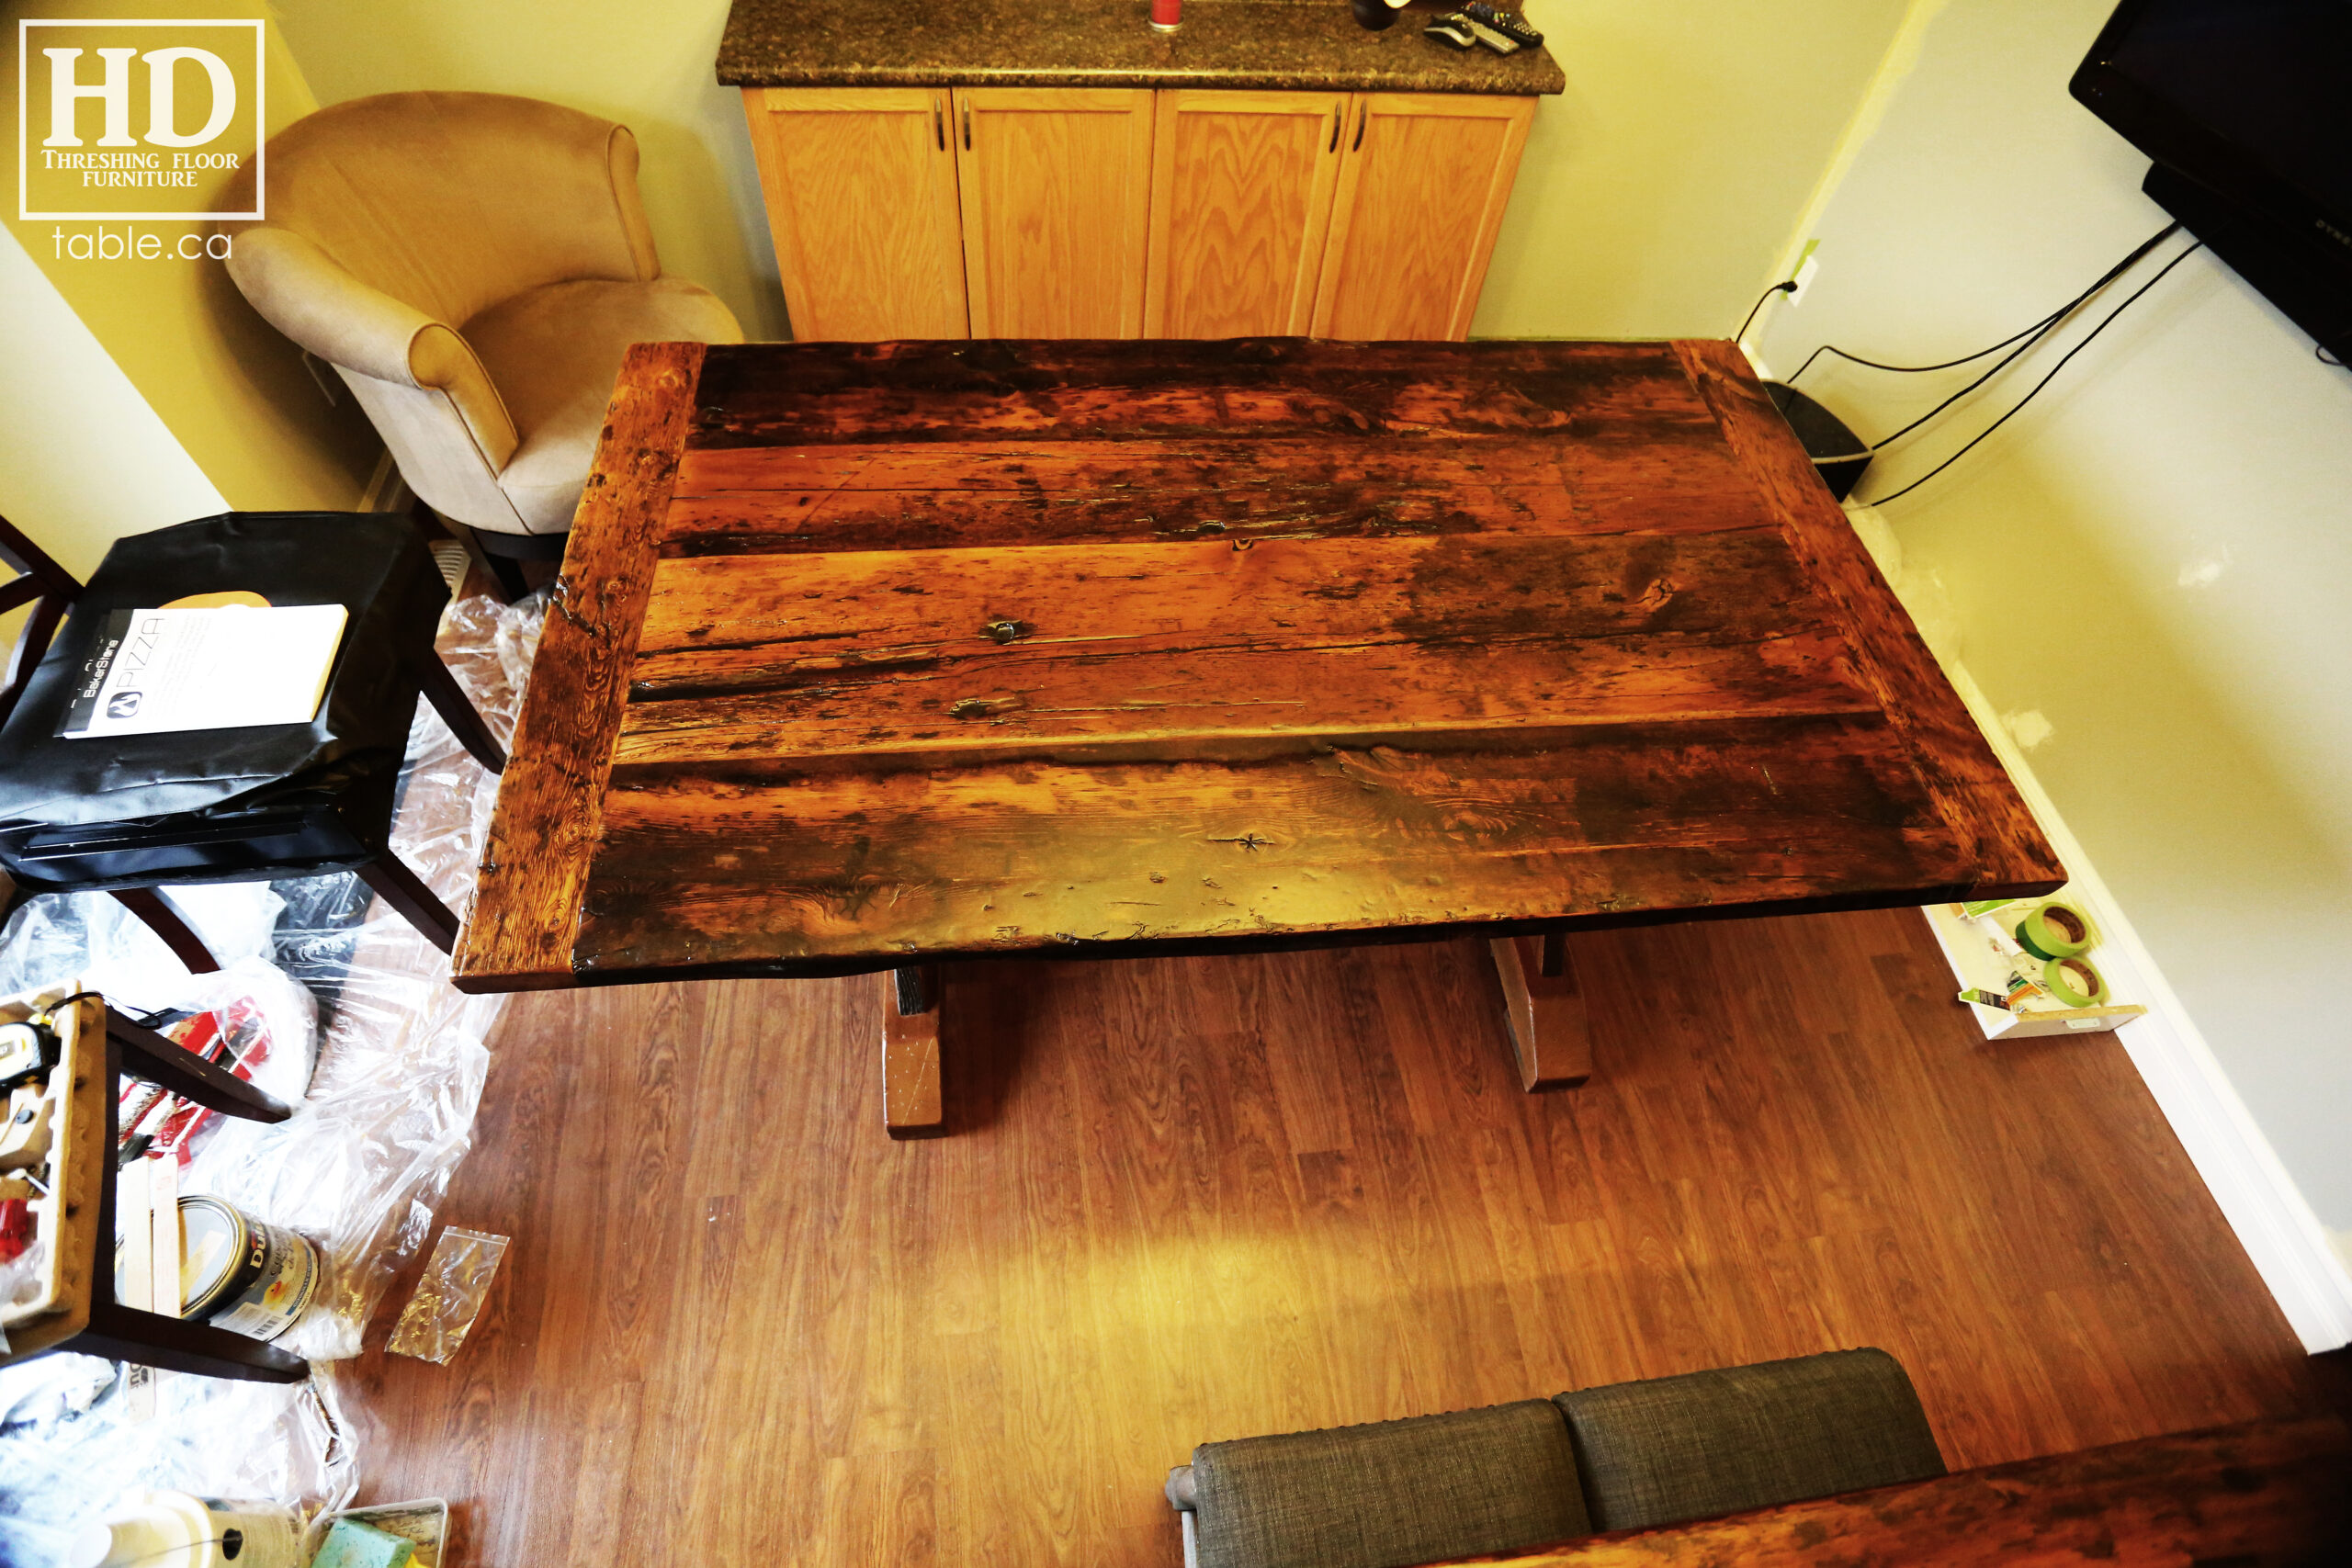 Hemlock Barnwood Table by HD Threshing Floor Furniture / www.table.ca